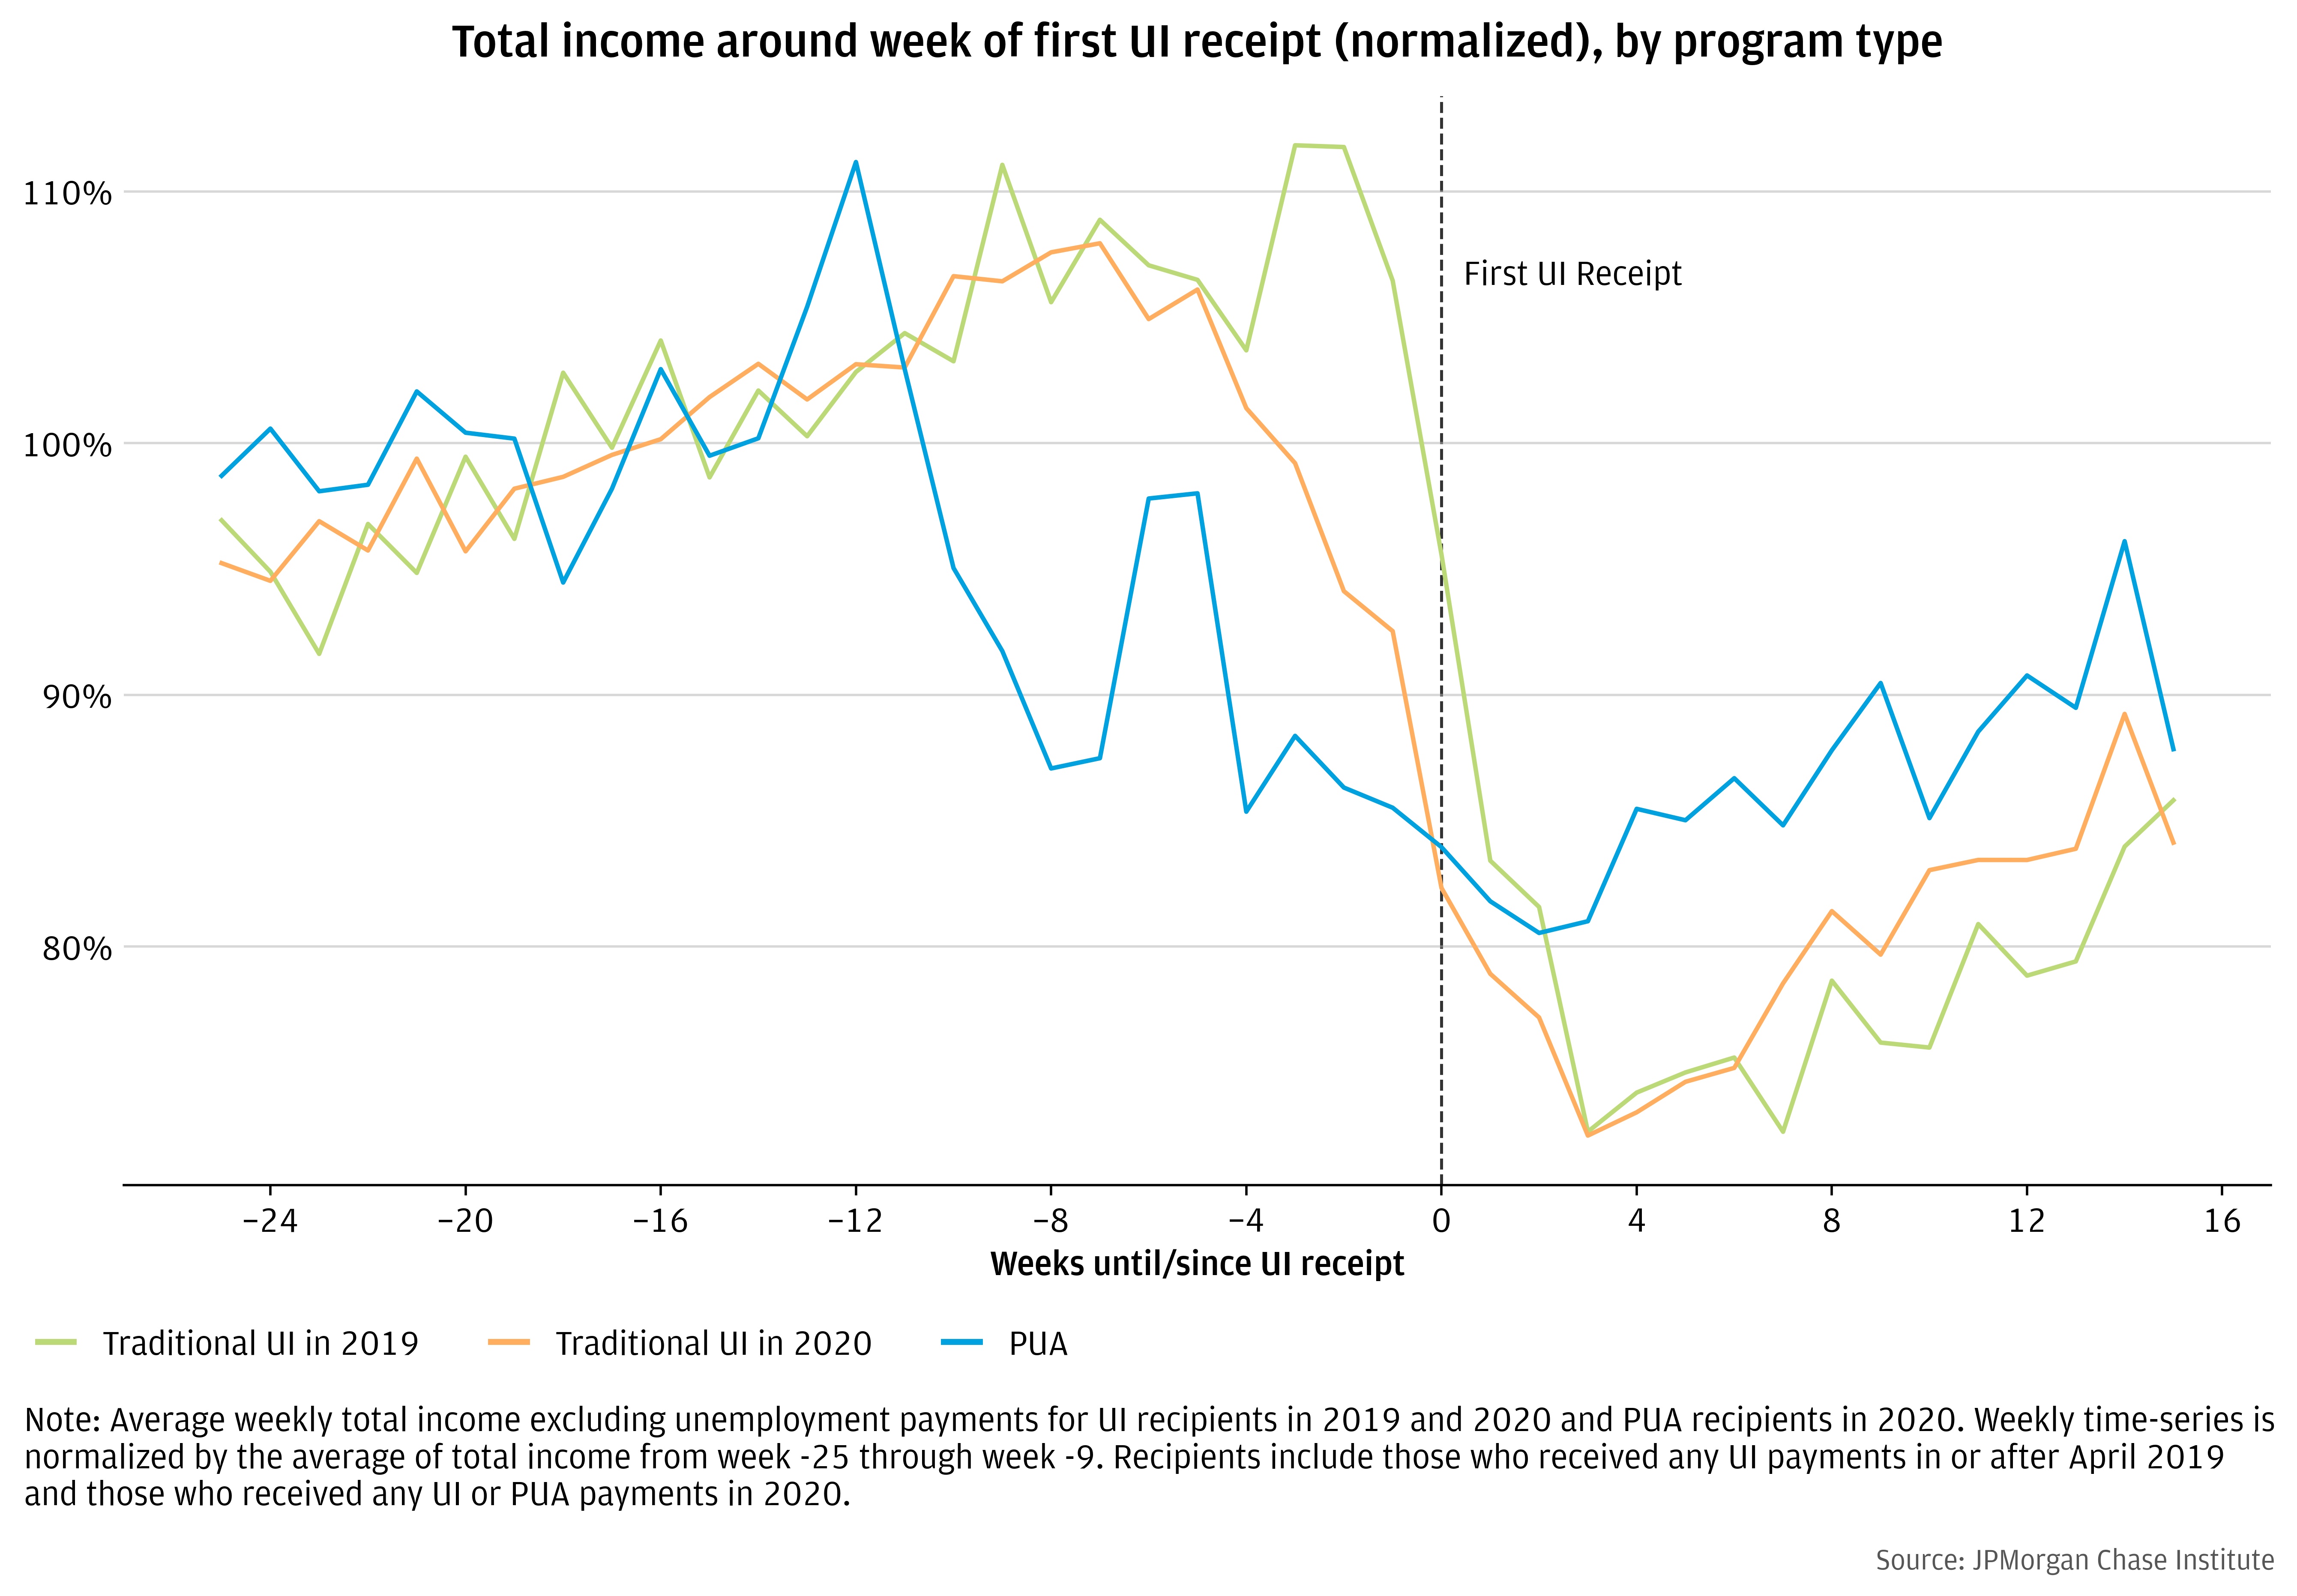 PUA recipients experienced similar income losses to traditional UI recipients